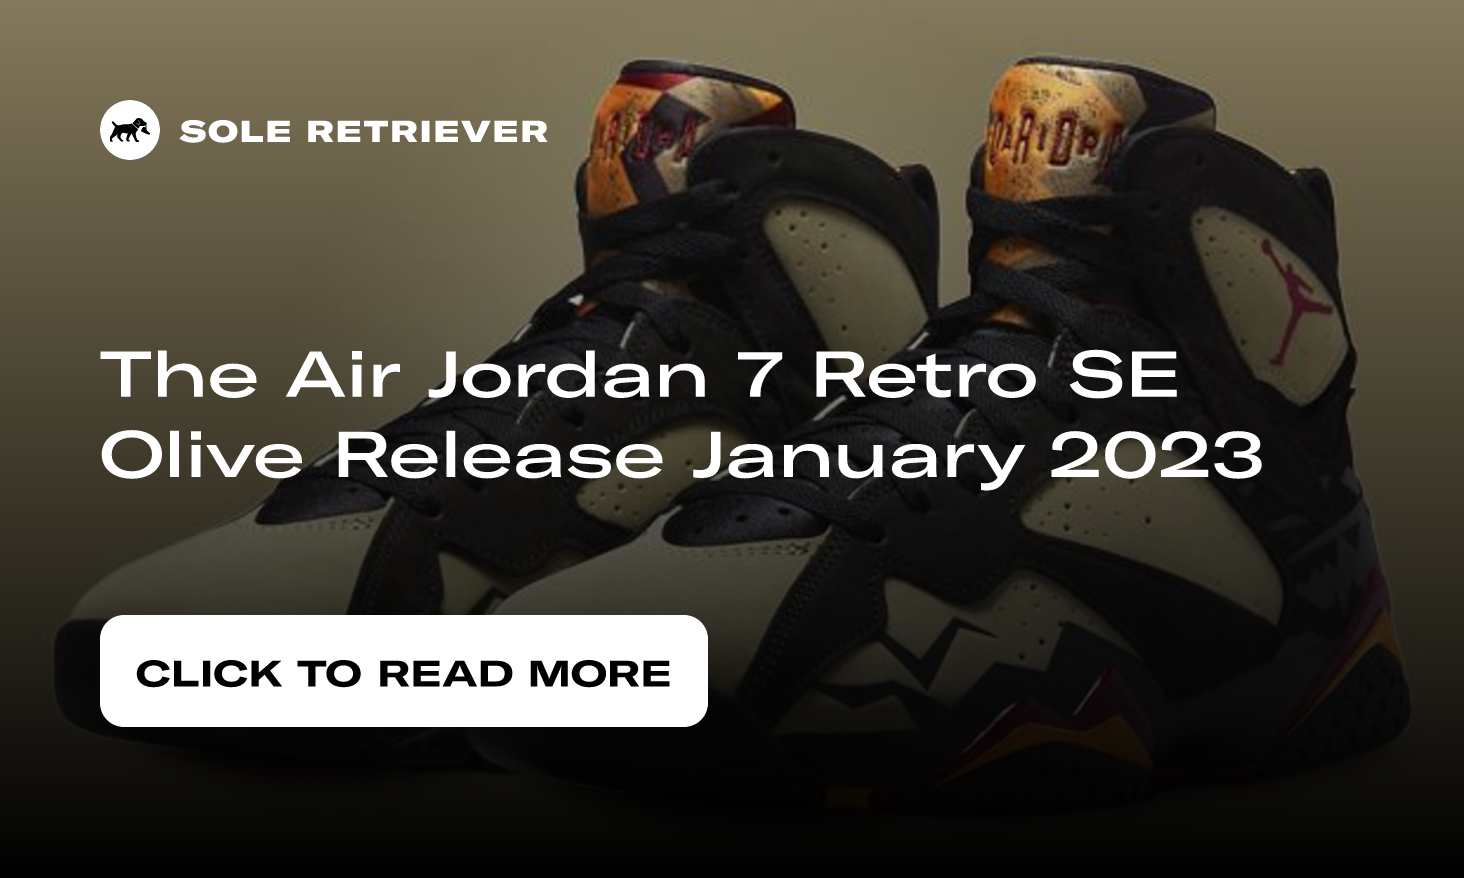 The Air Jordan 7 Retro SE Olive Release January 2023